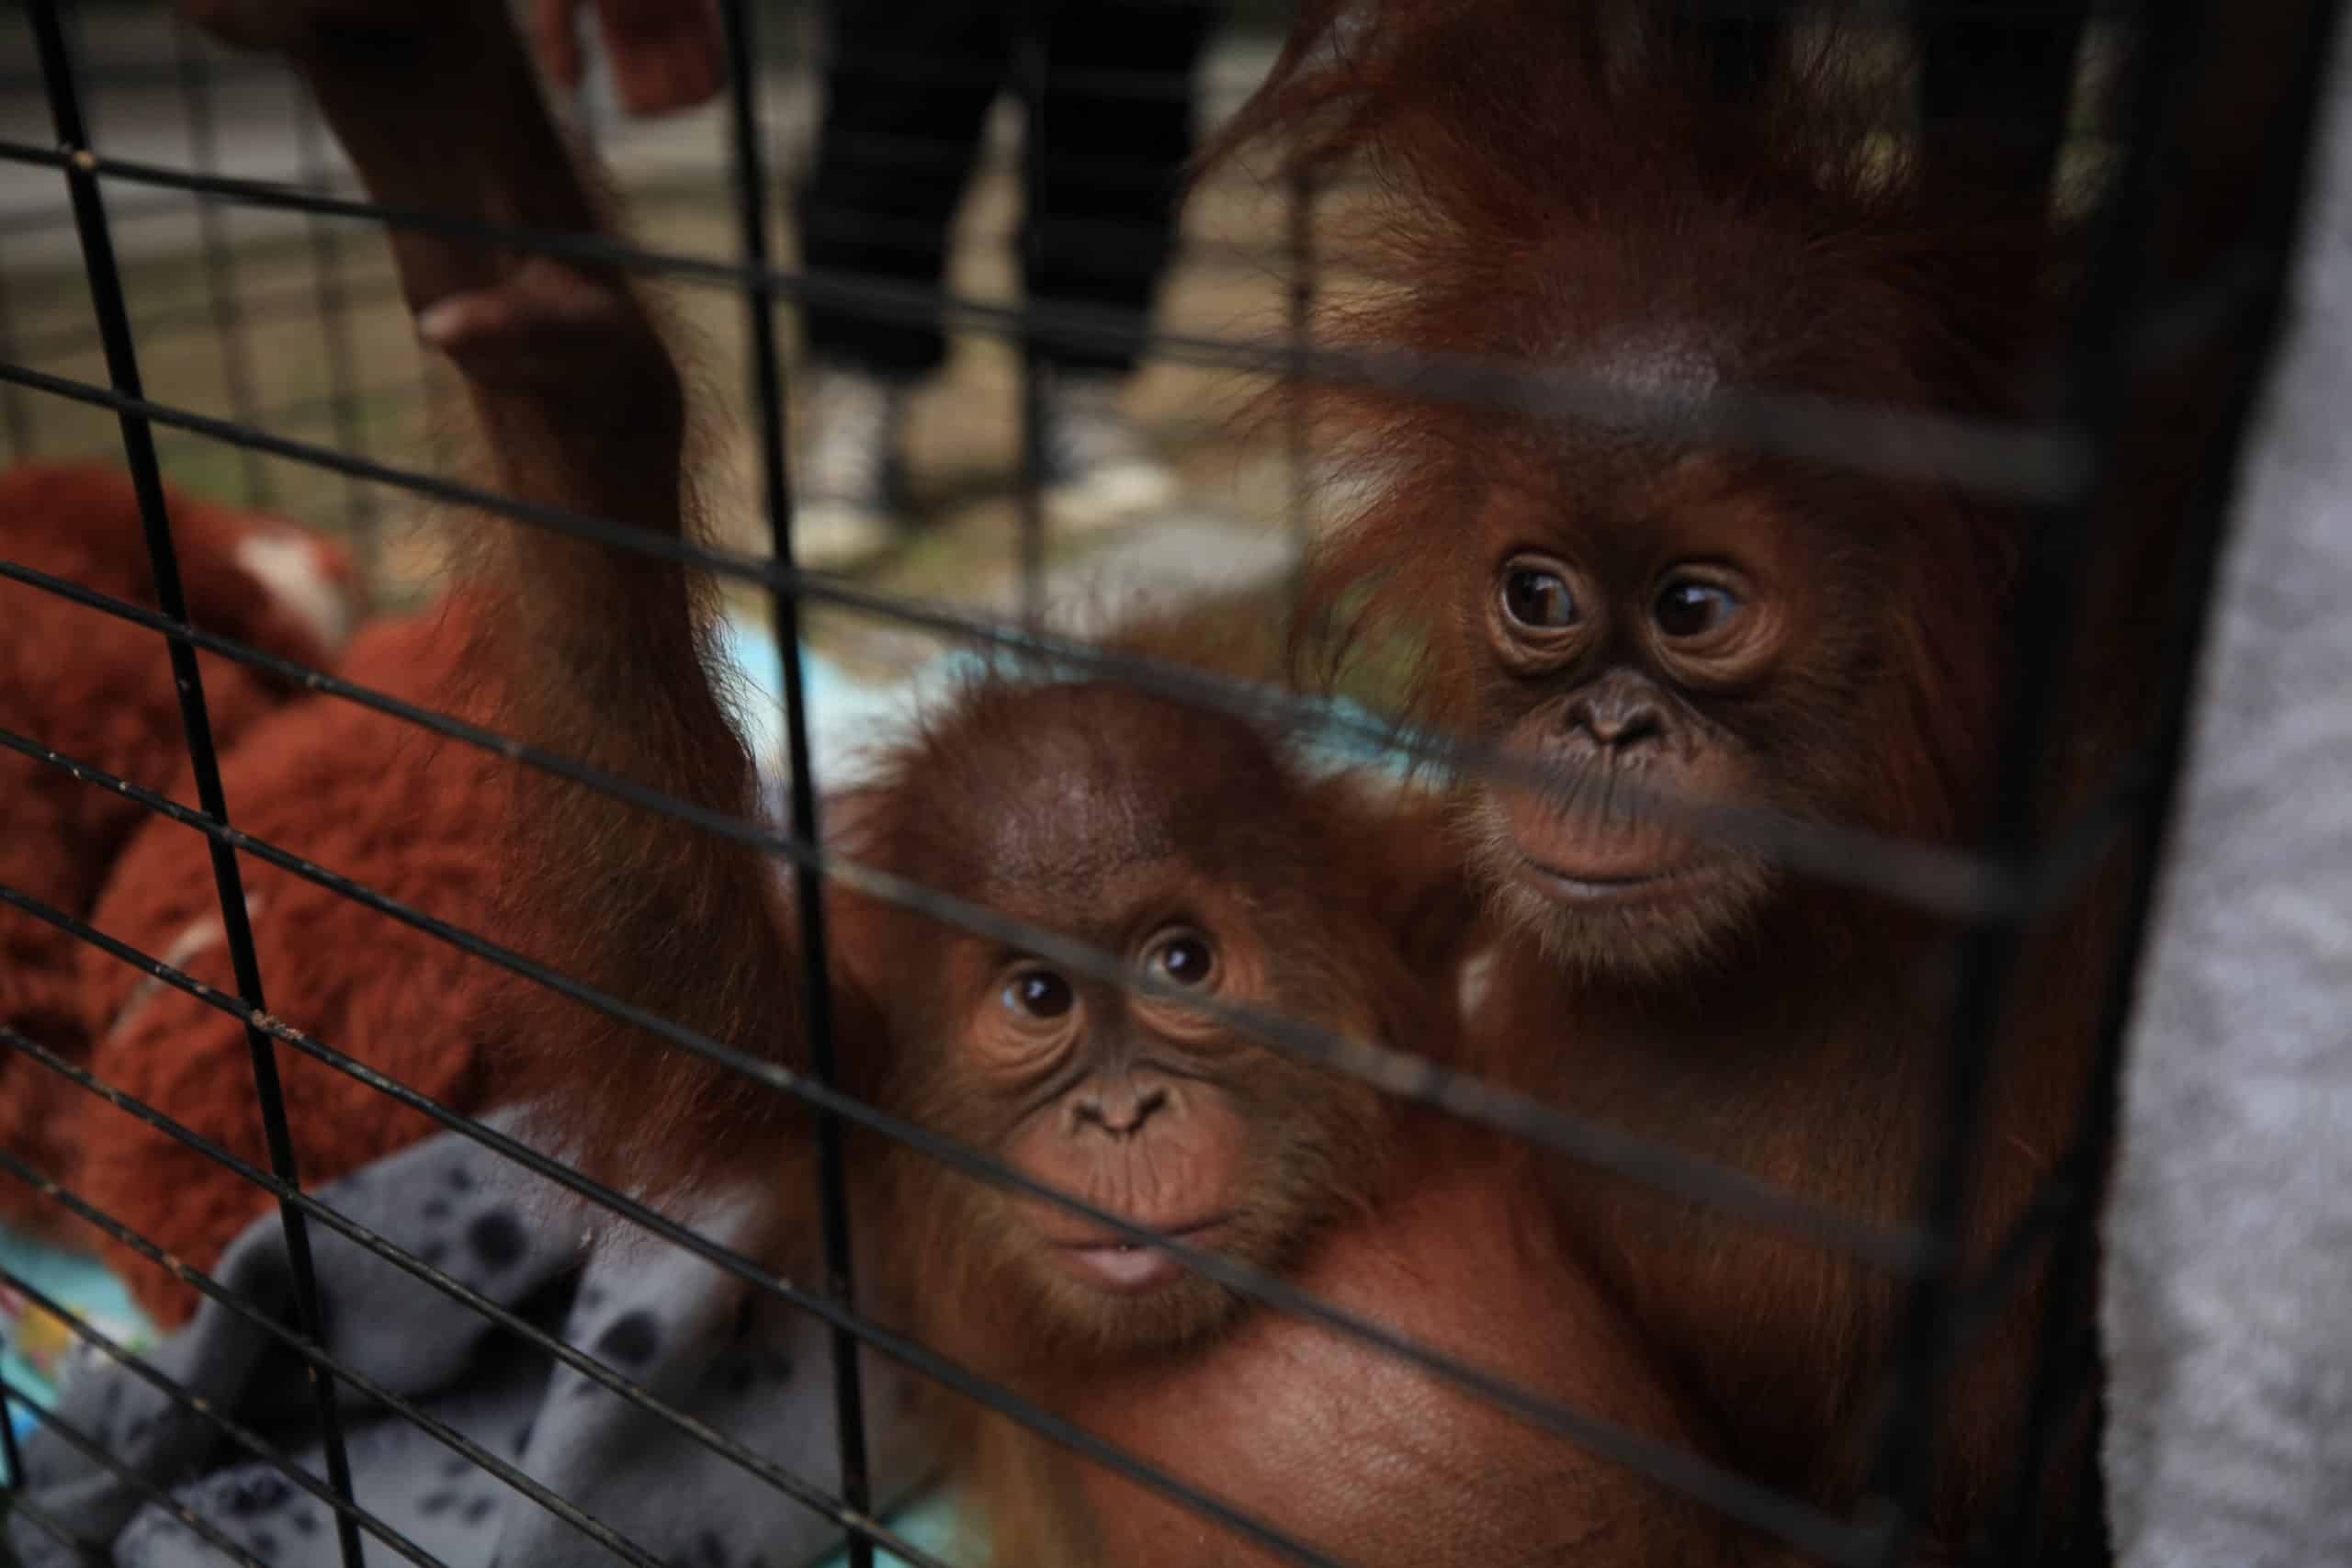 save the orangutan